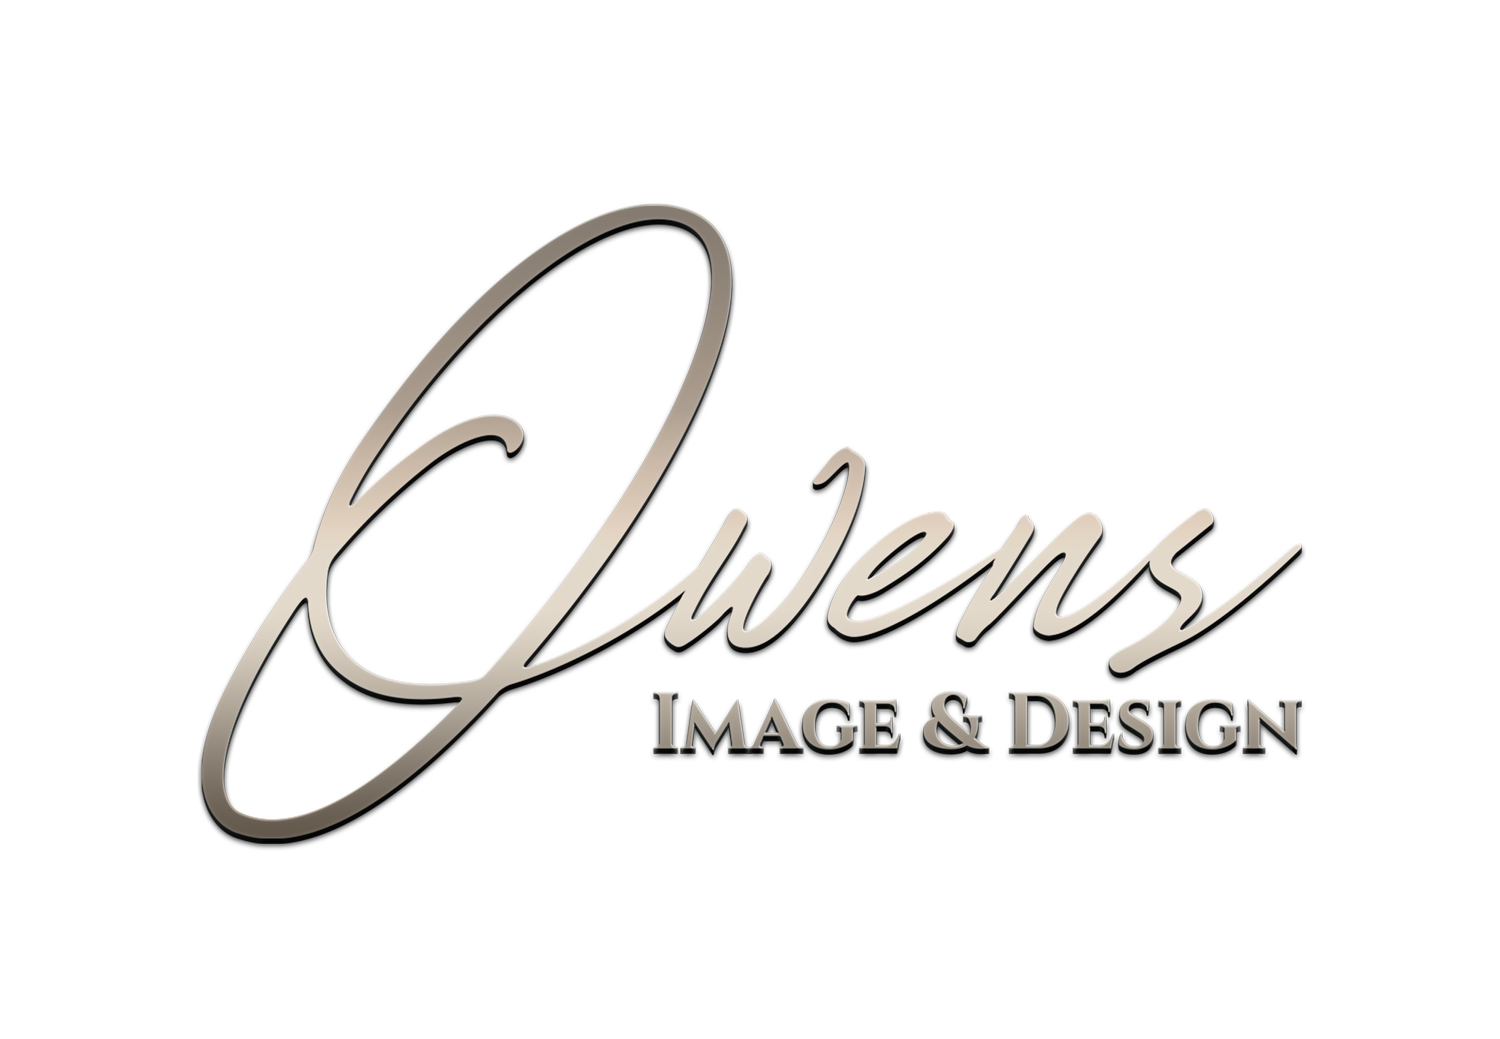 Owens Image & Design